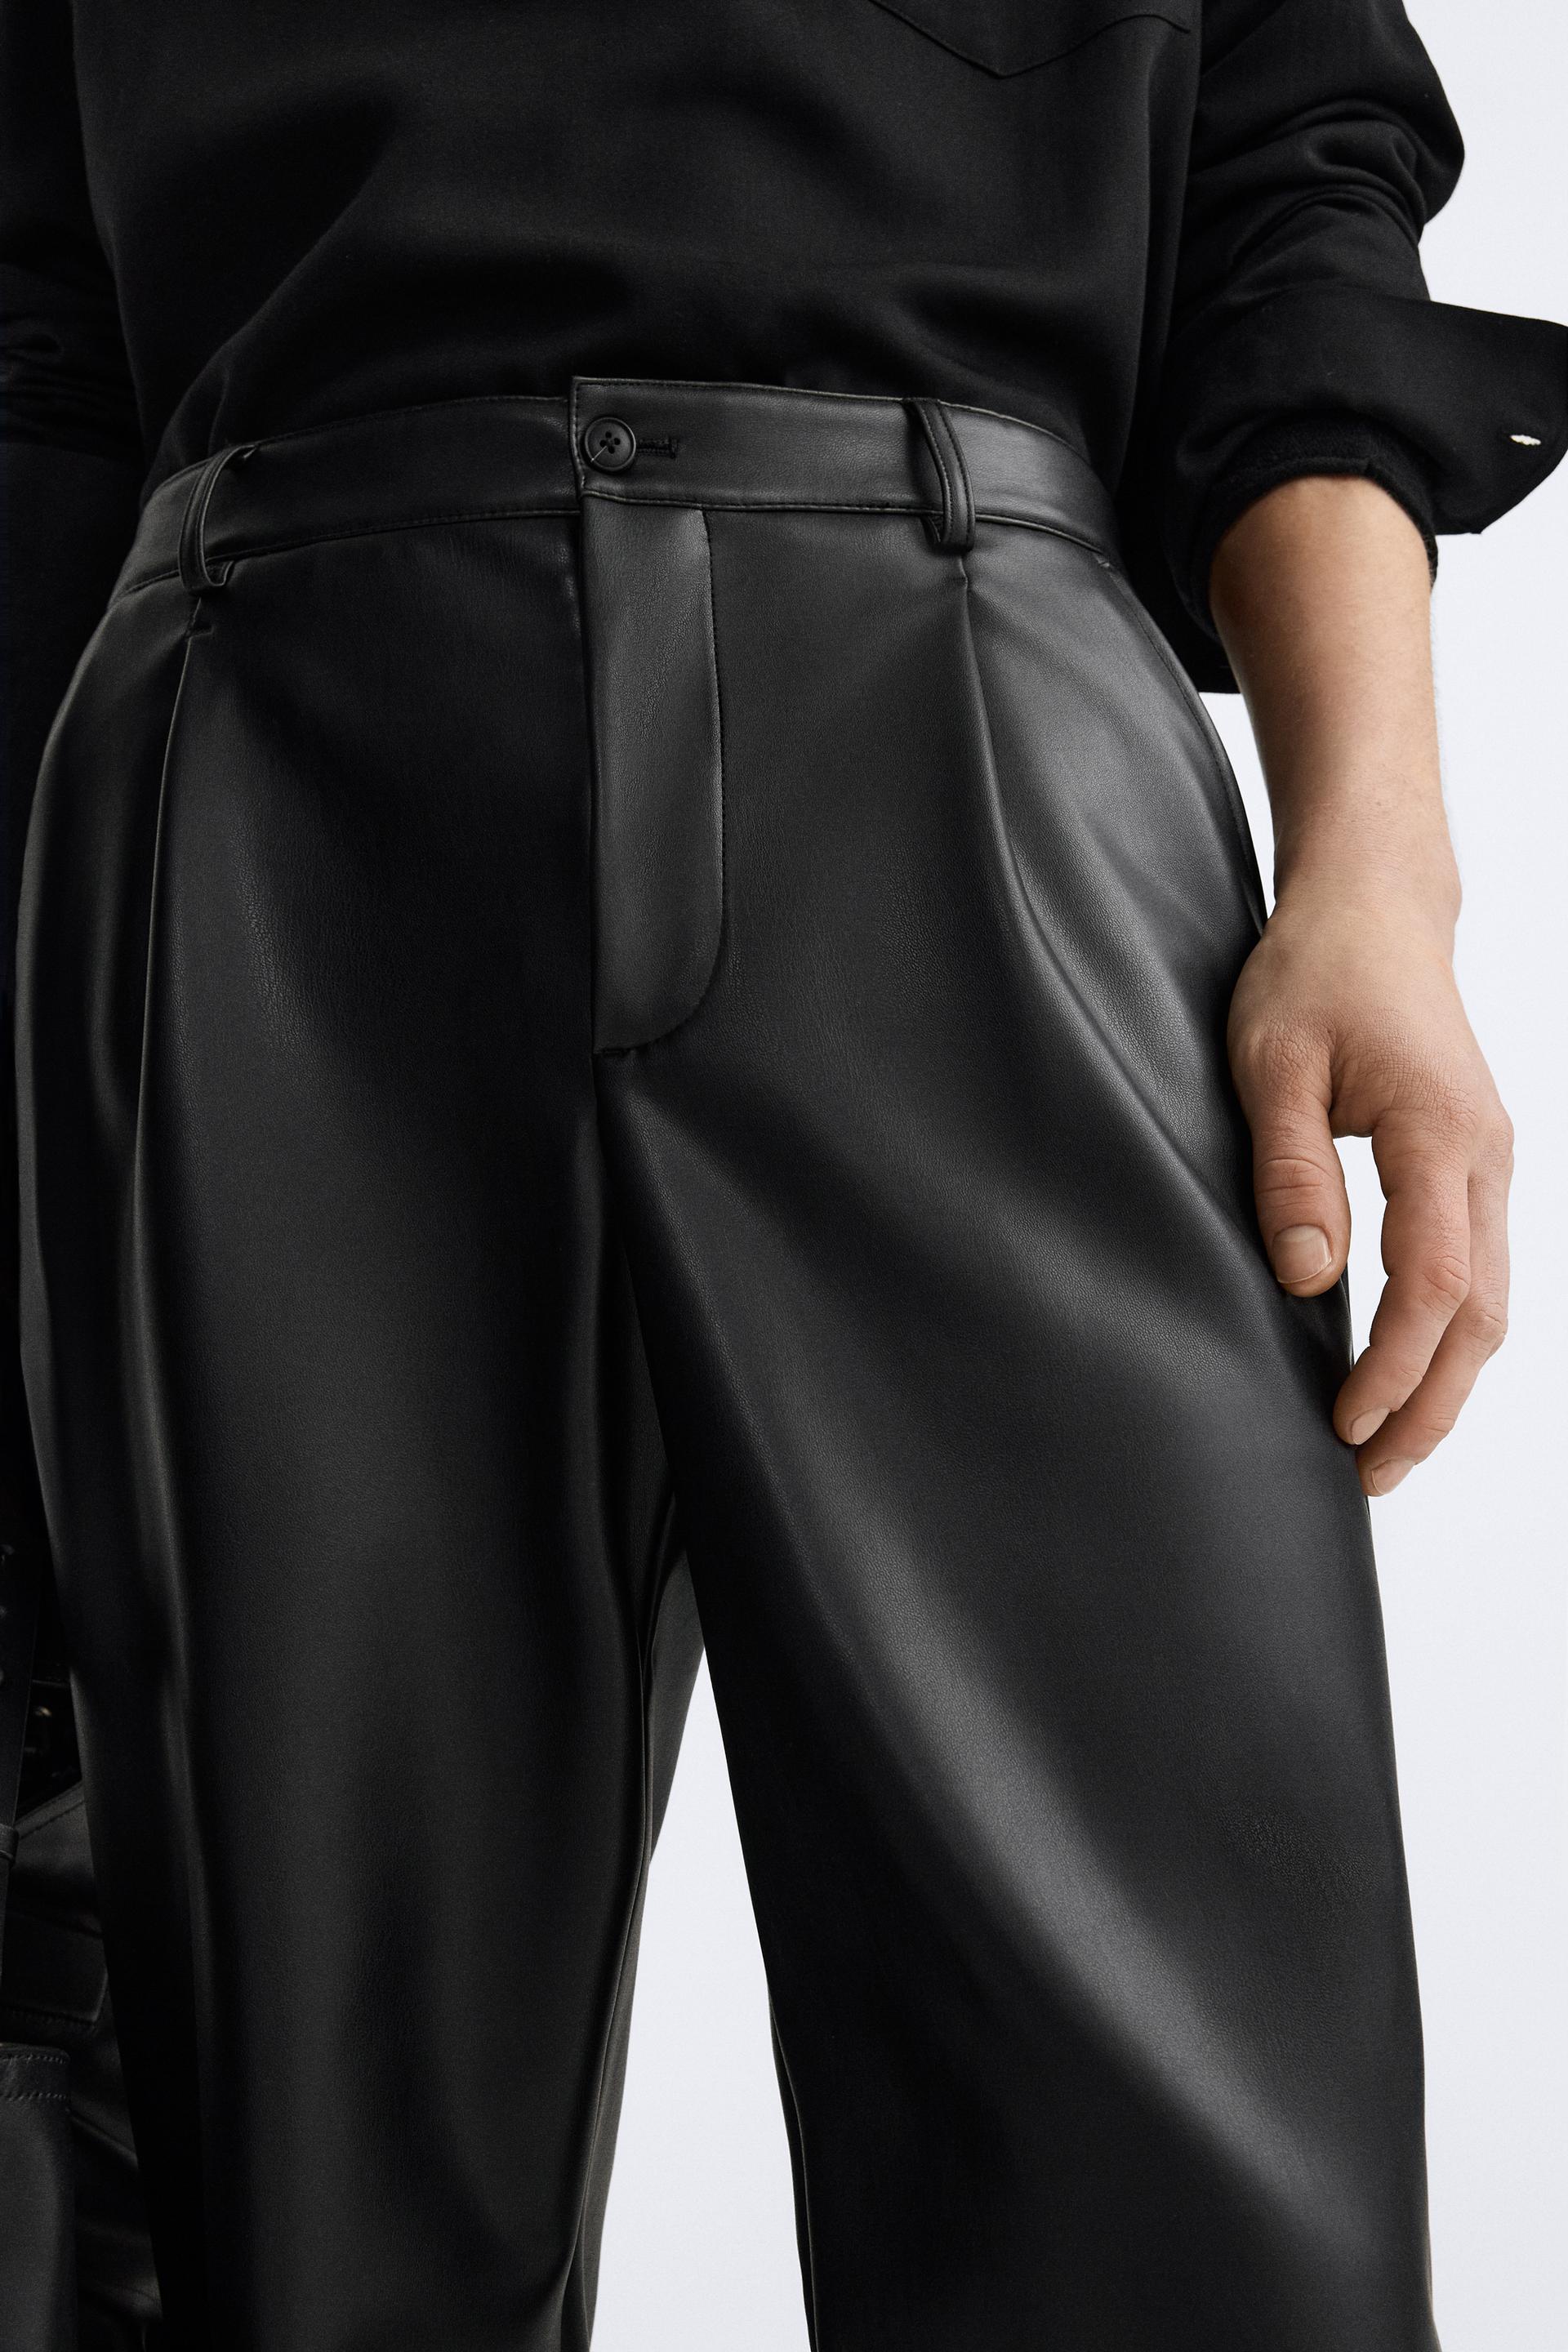 NWT Zara Dark Green Faux Leather High Waist Leggings Trousers Pants  Bloggers S